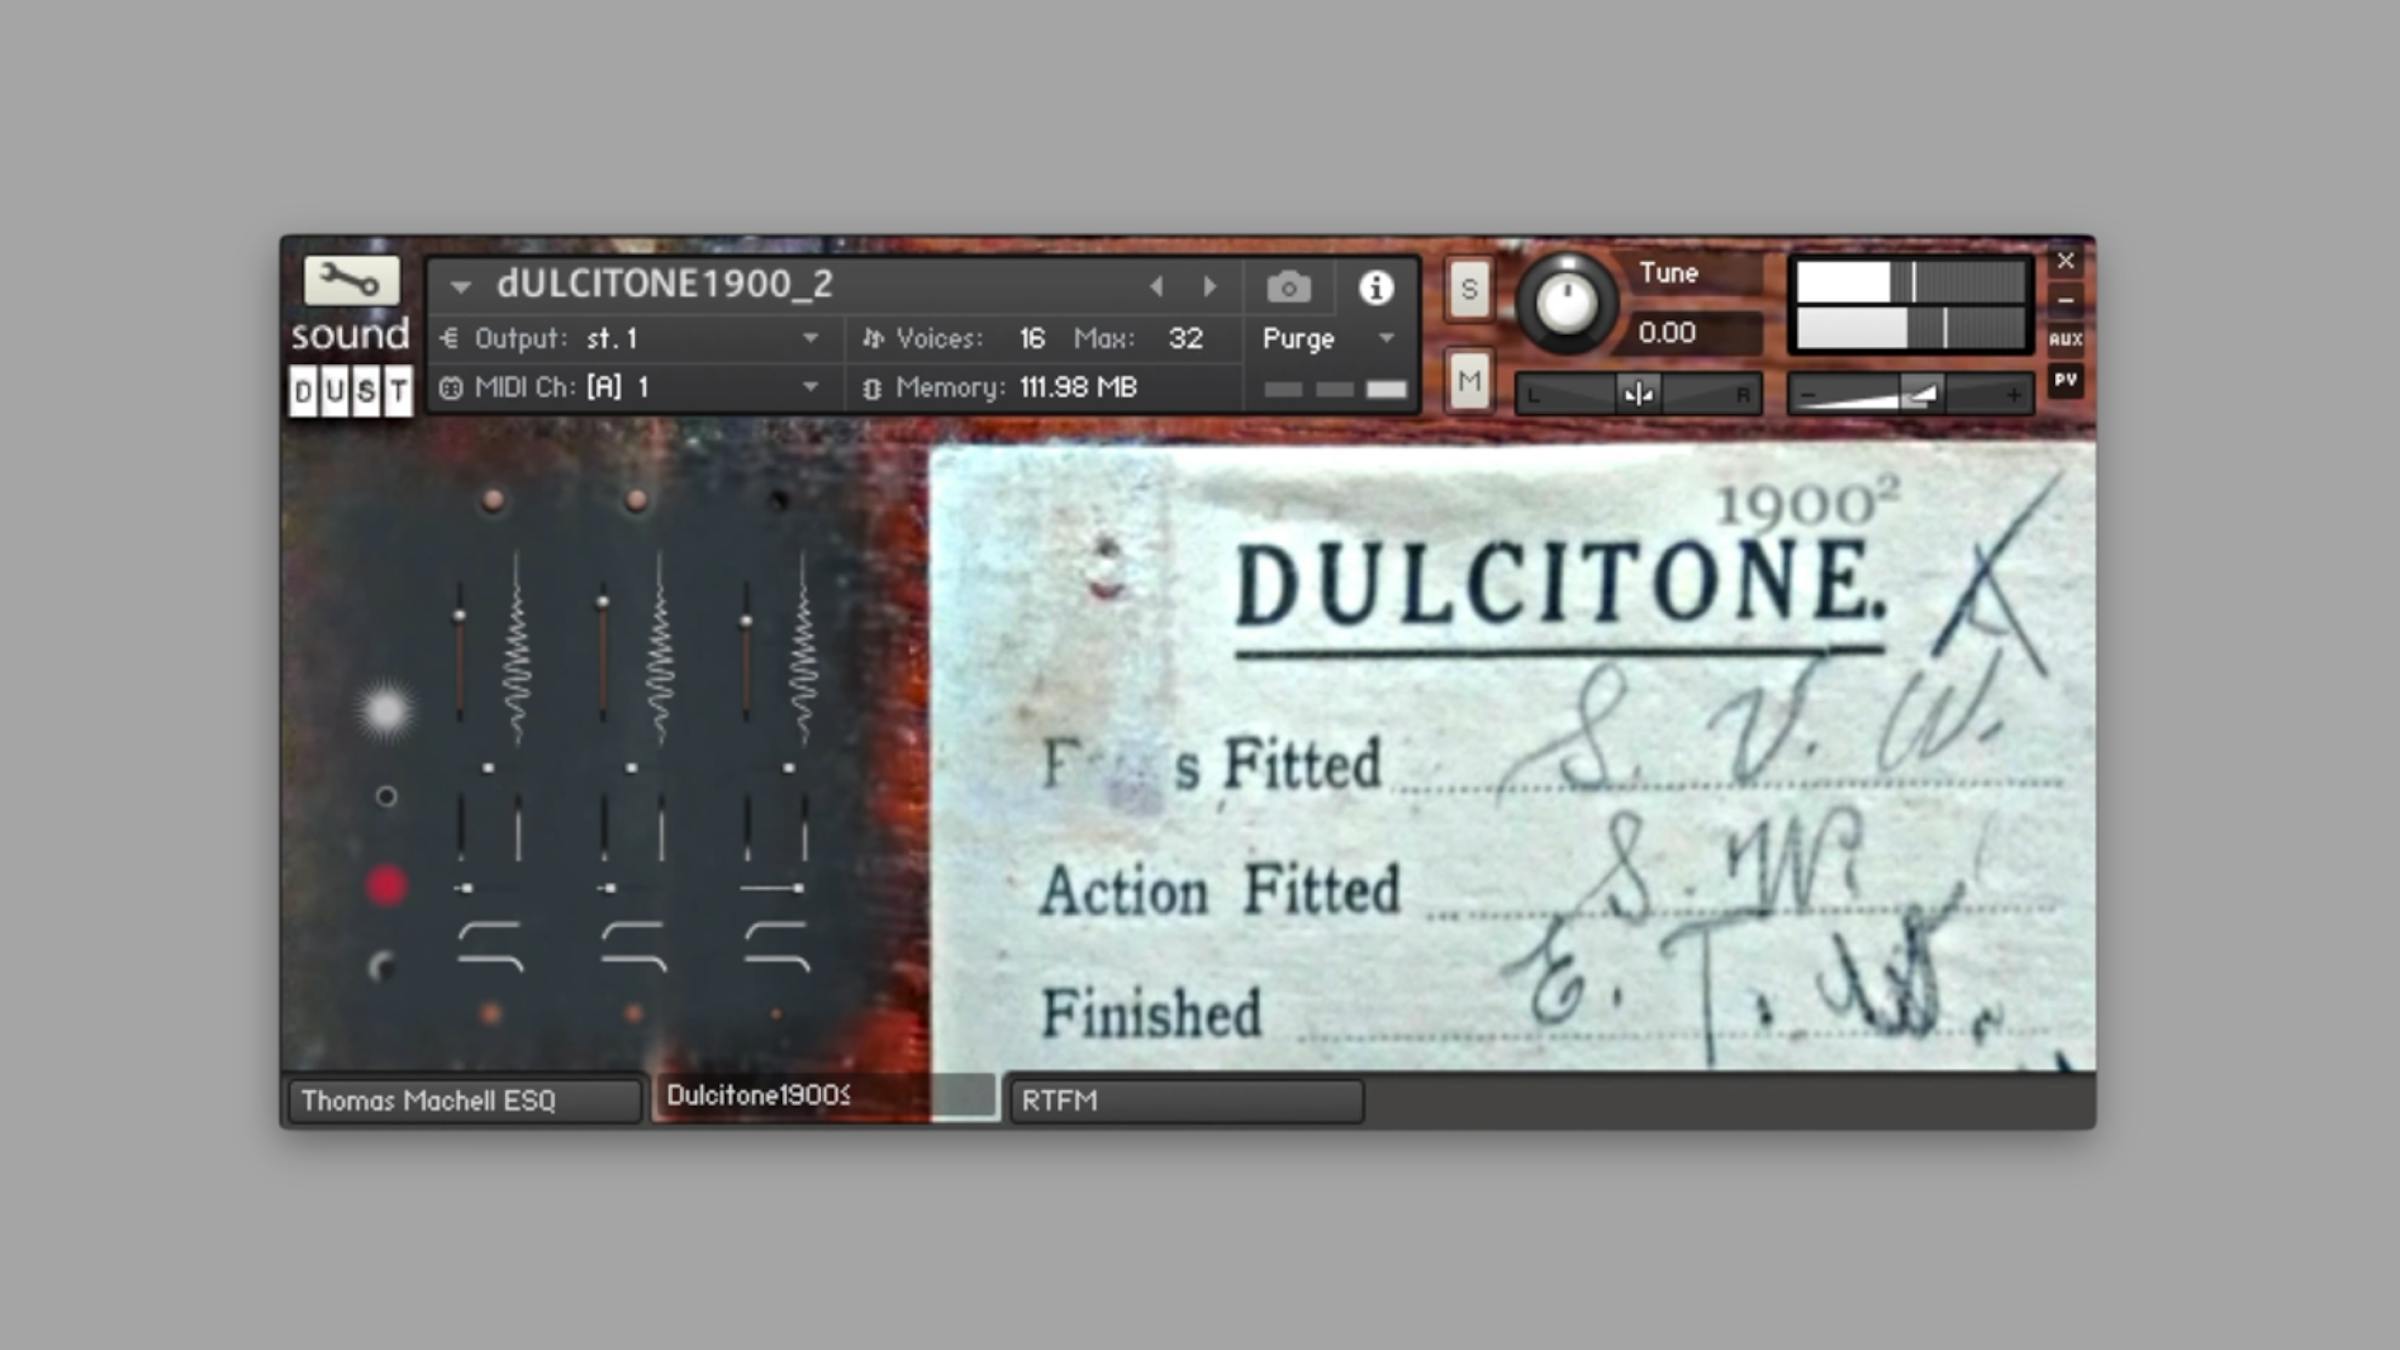 Sound Dust Vol 1 - Dulcitone 1900